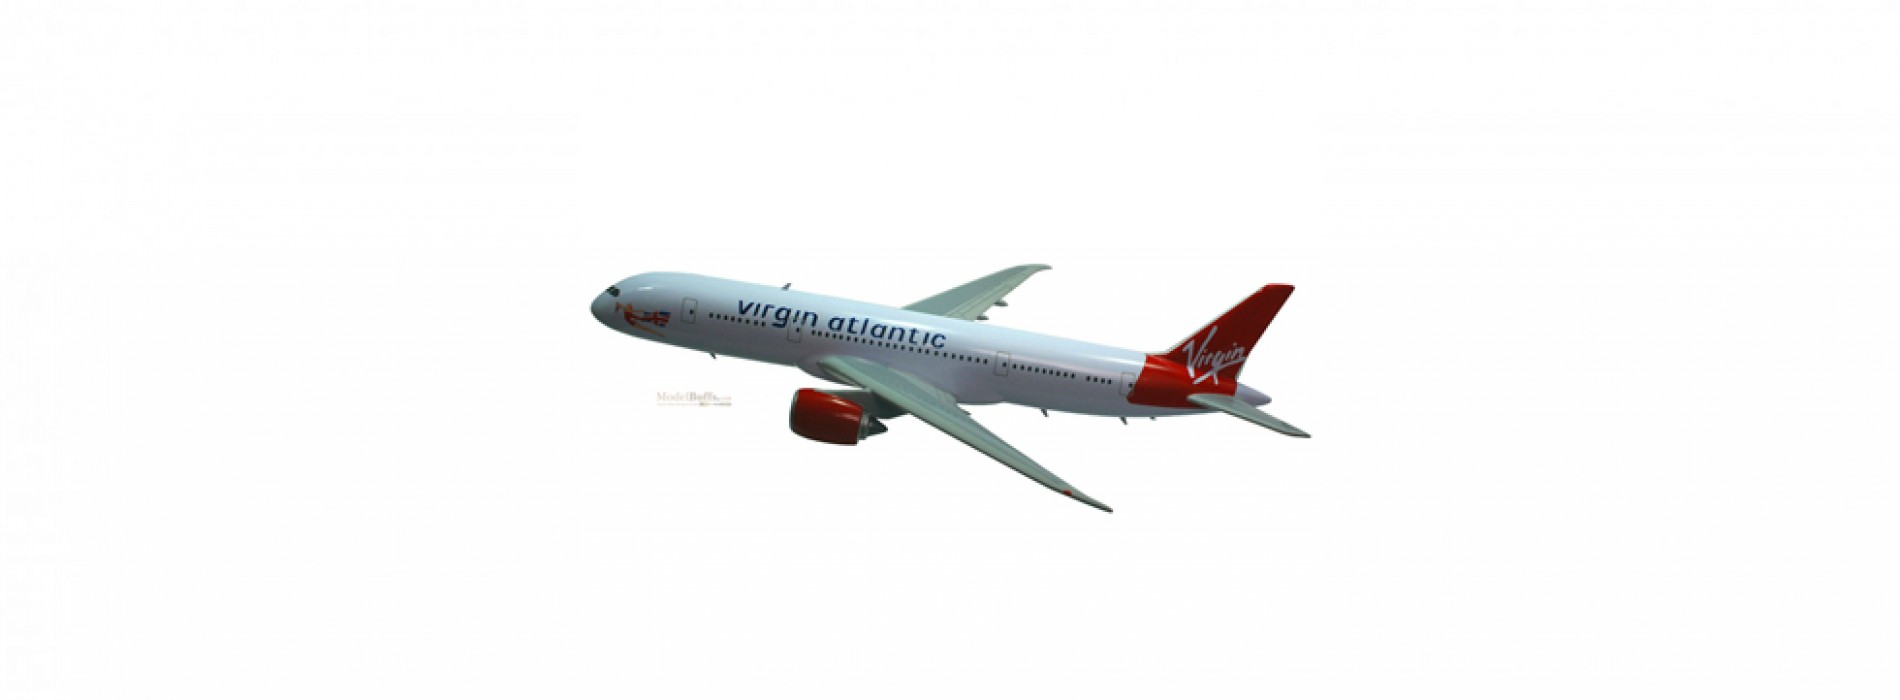 P&O partners with Virgin Atlantic for Caribbean cruise season